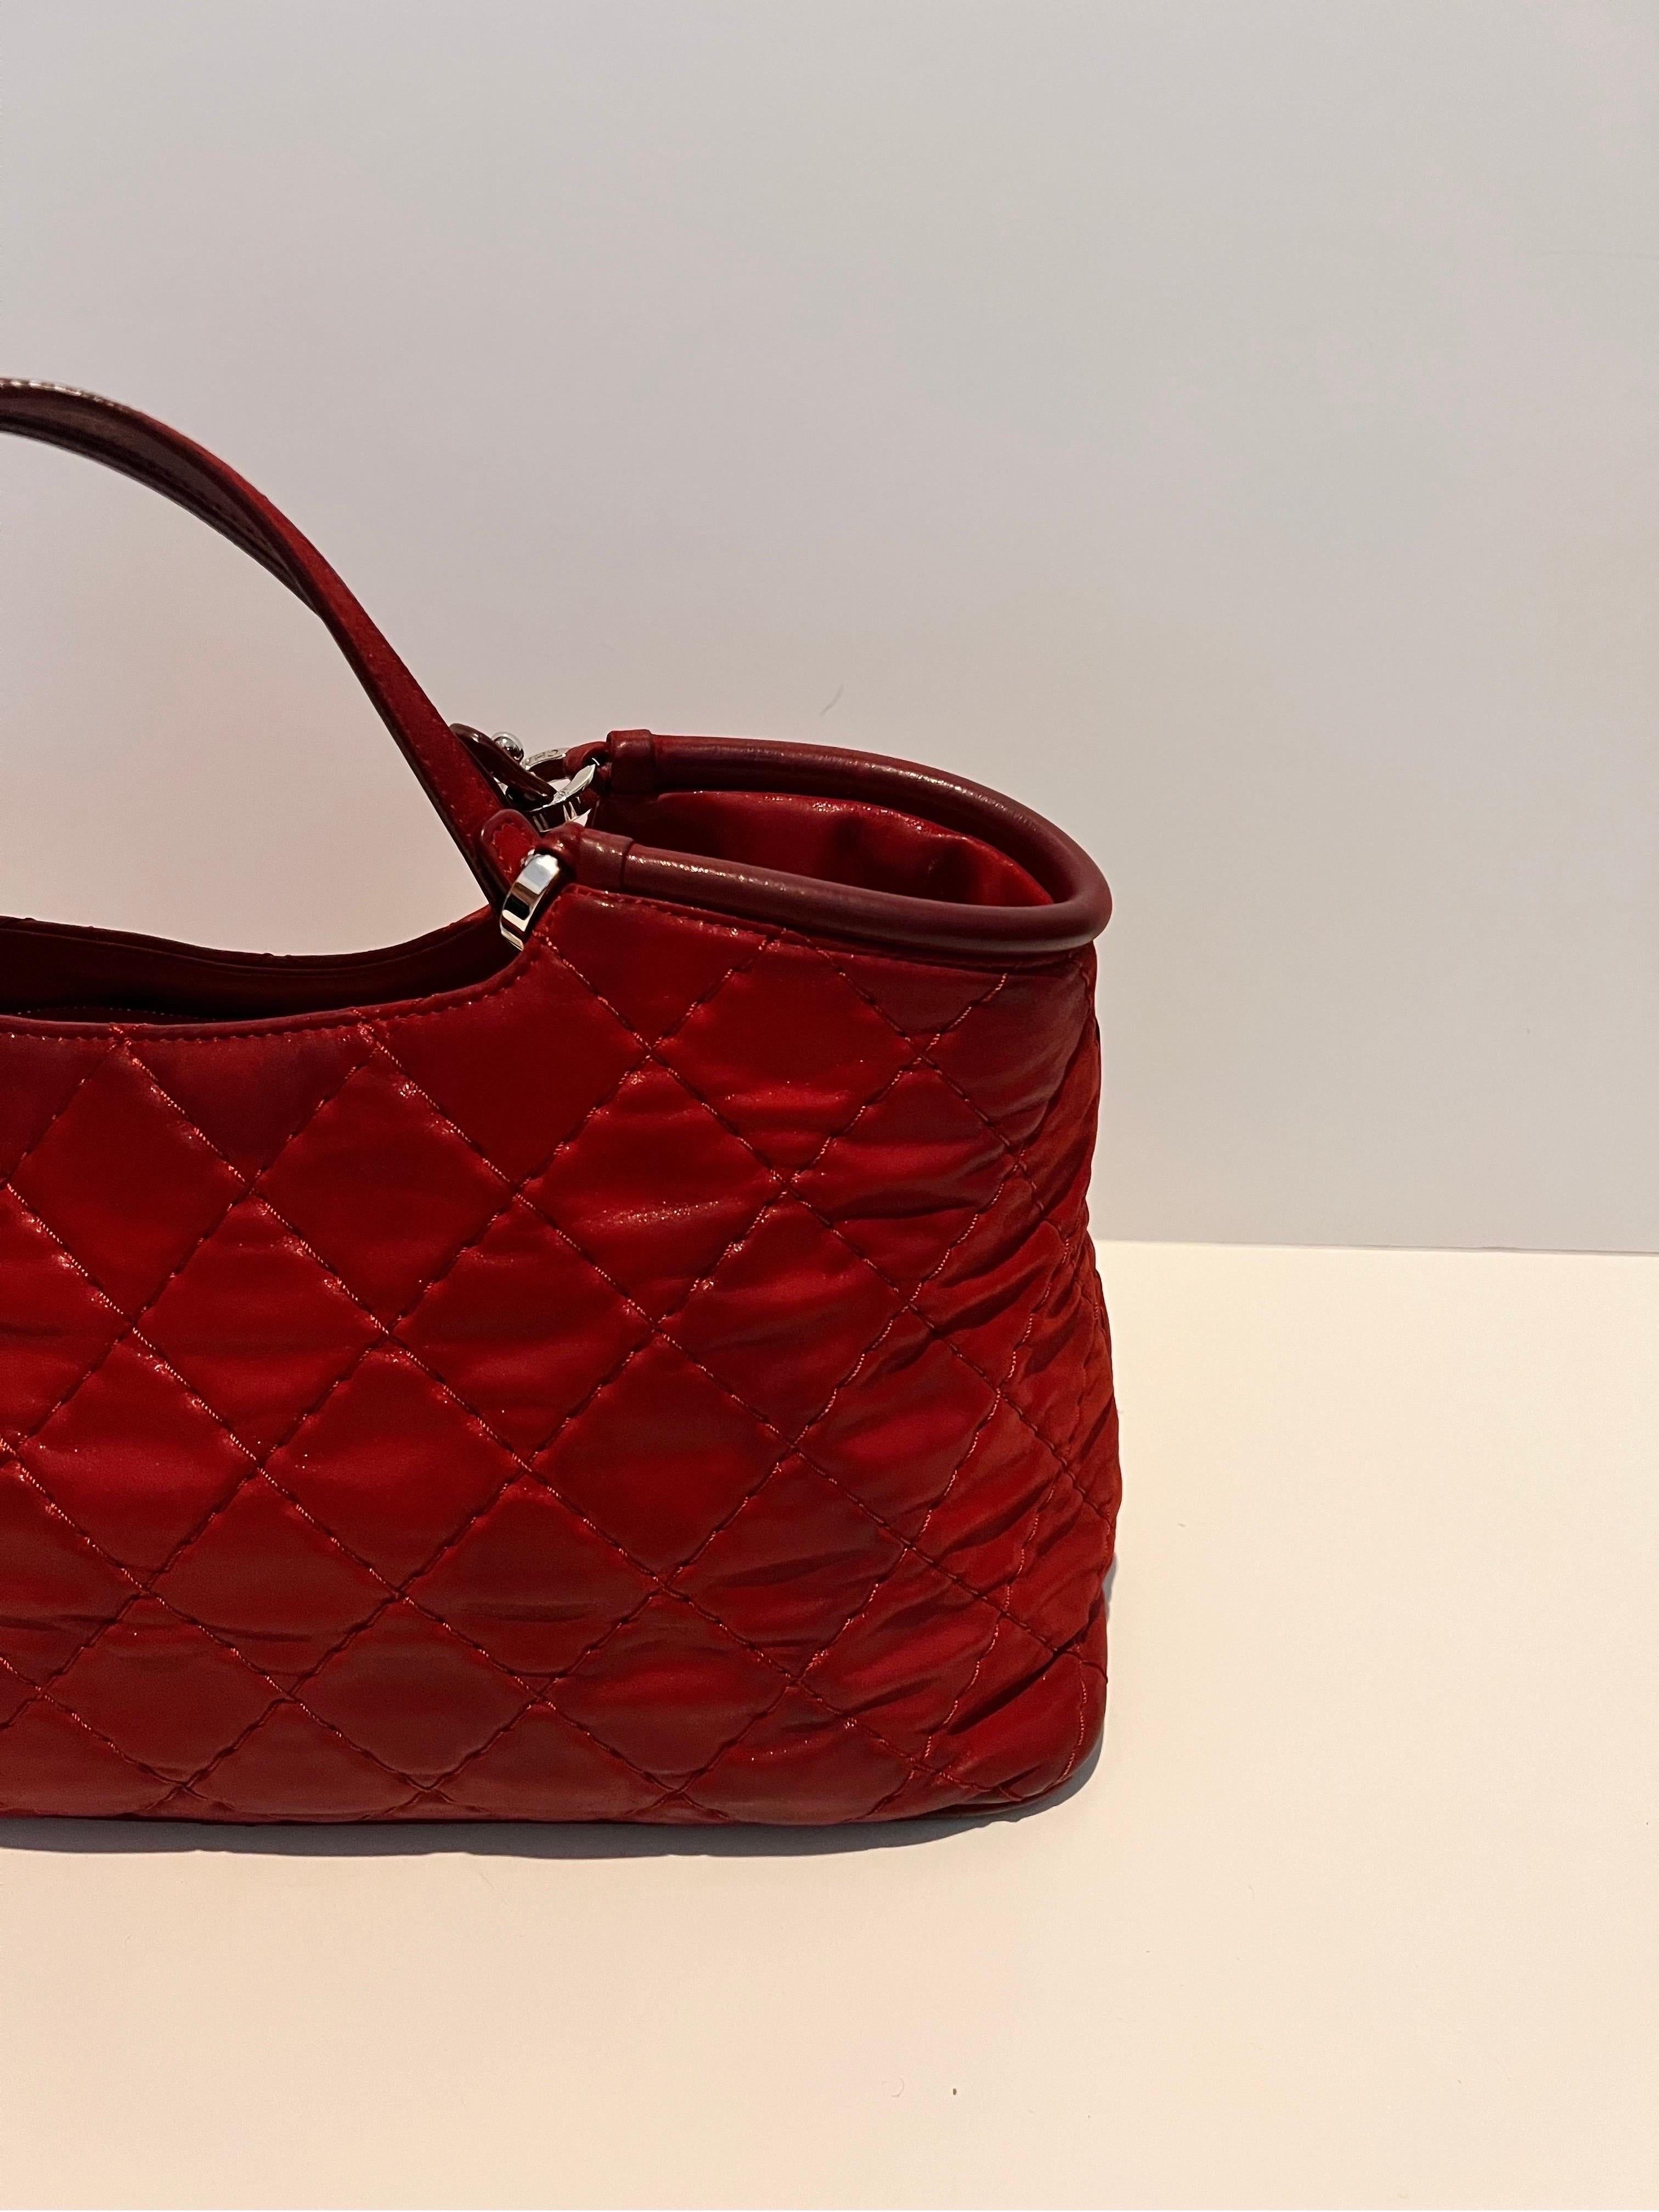 Women's or Men's Chanel quilted handbag in red